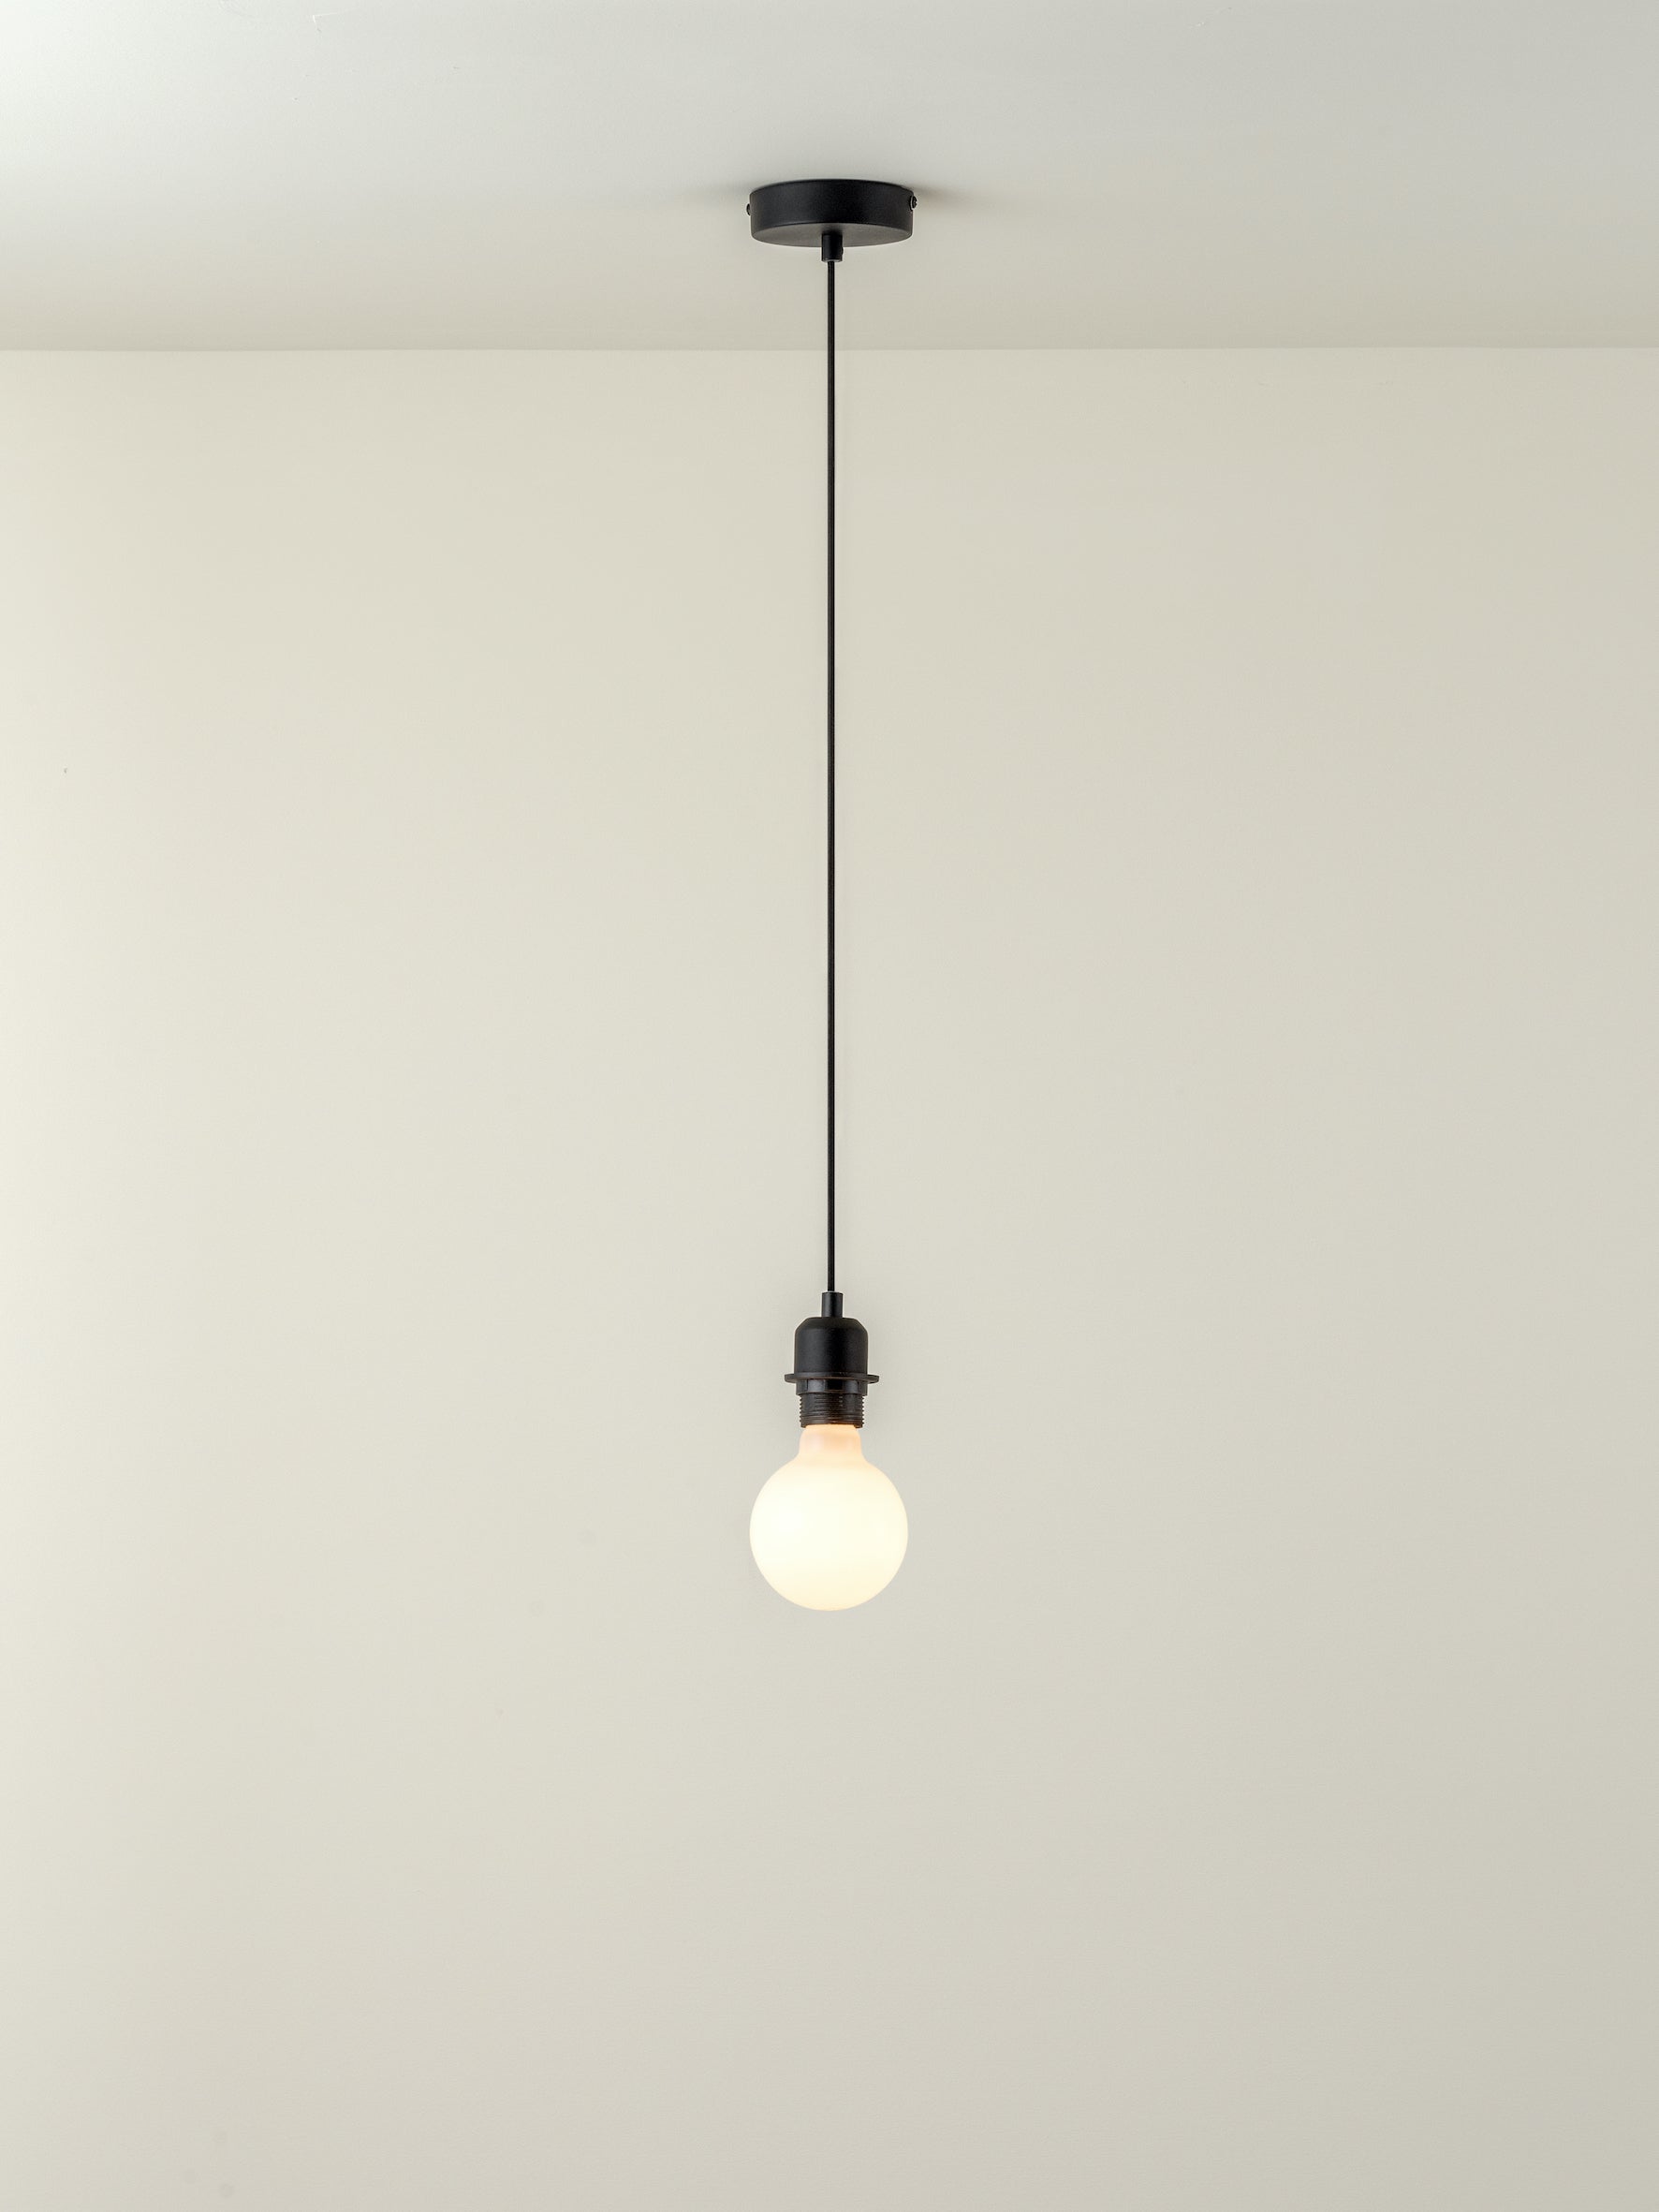 Capel - 1 light matt black drop cap lampholder kit | Ceiling Light | Lights & Lamps | UK